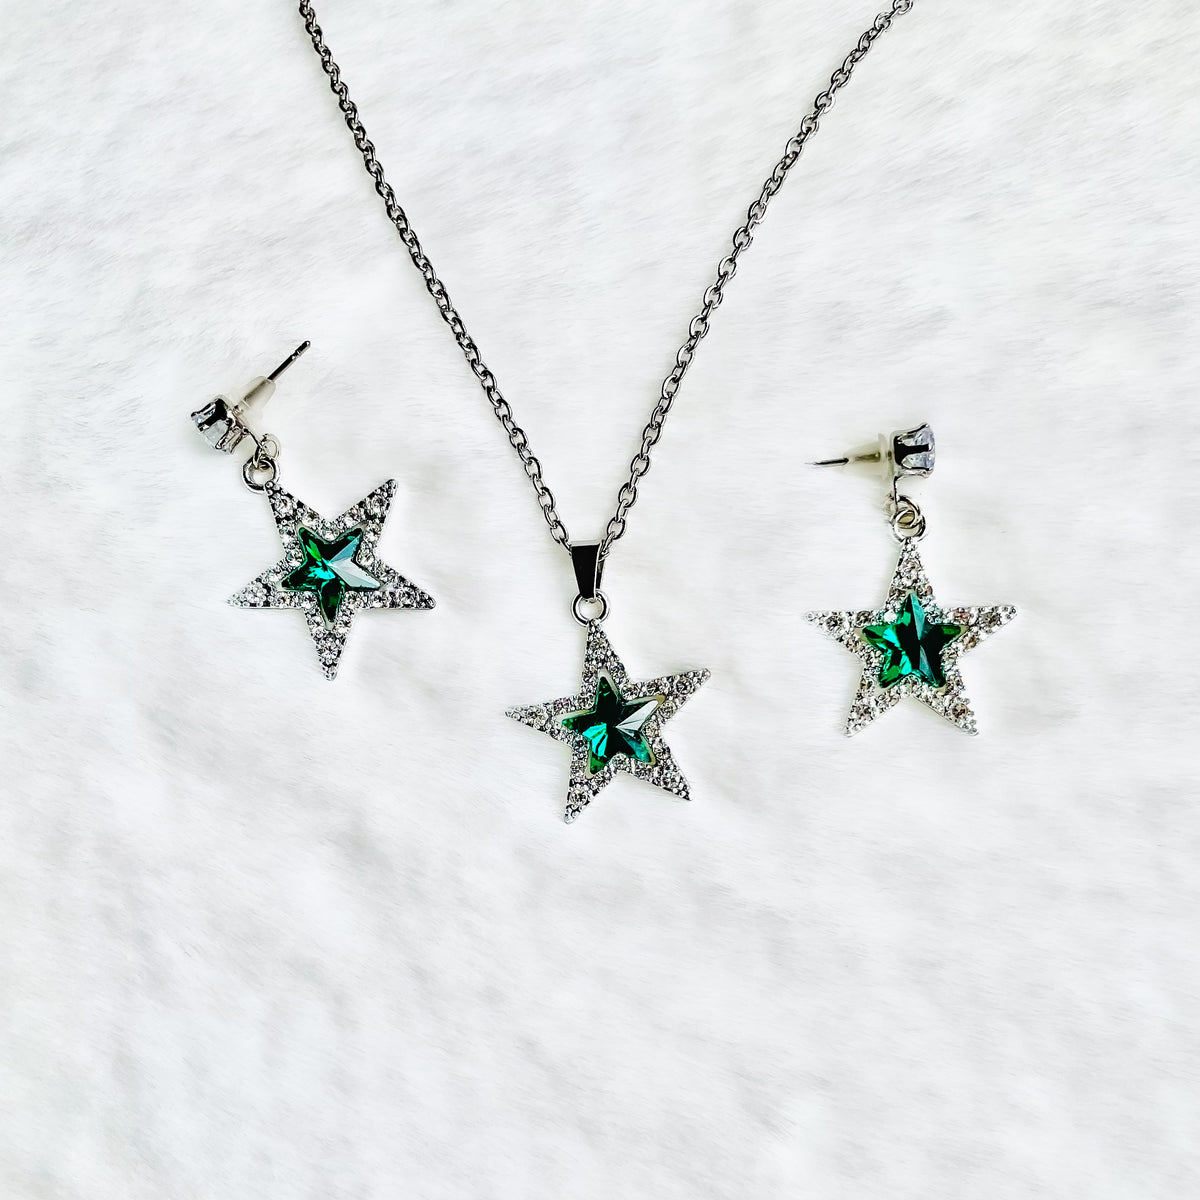 Shine Crystal Pendant Necklace Fashion Jewelry